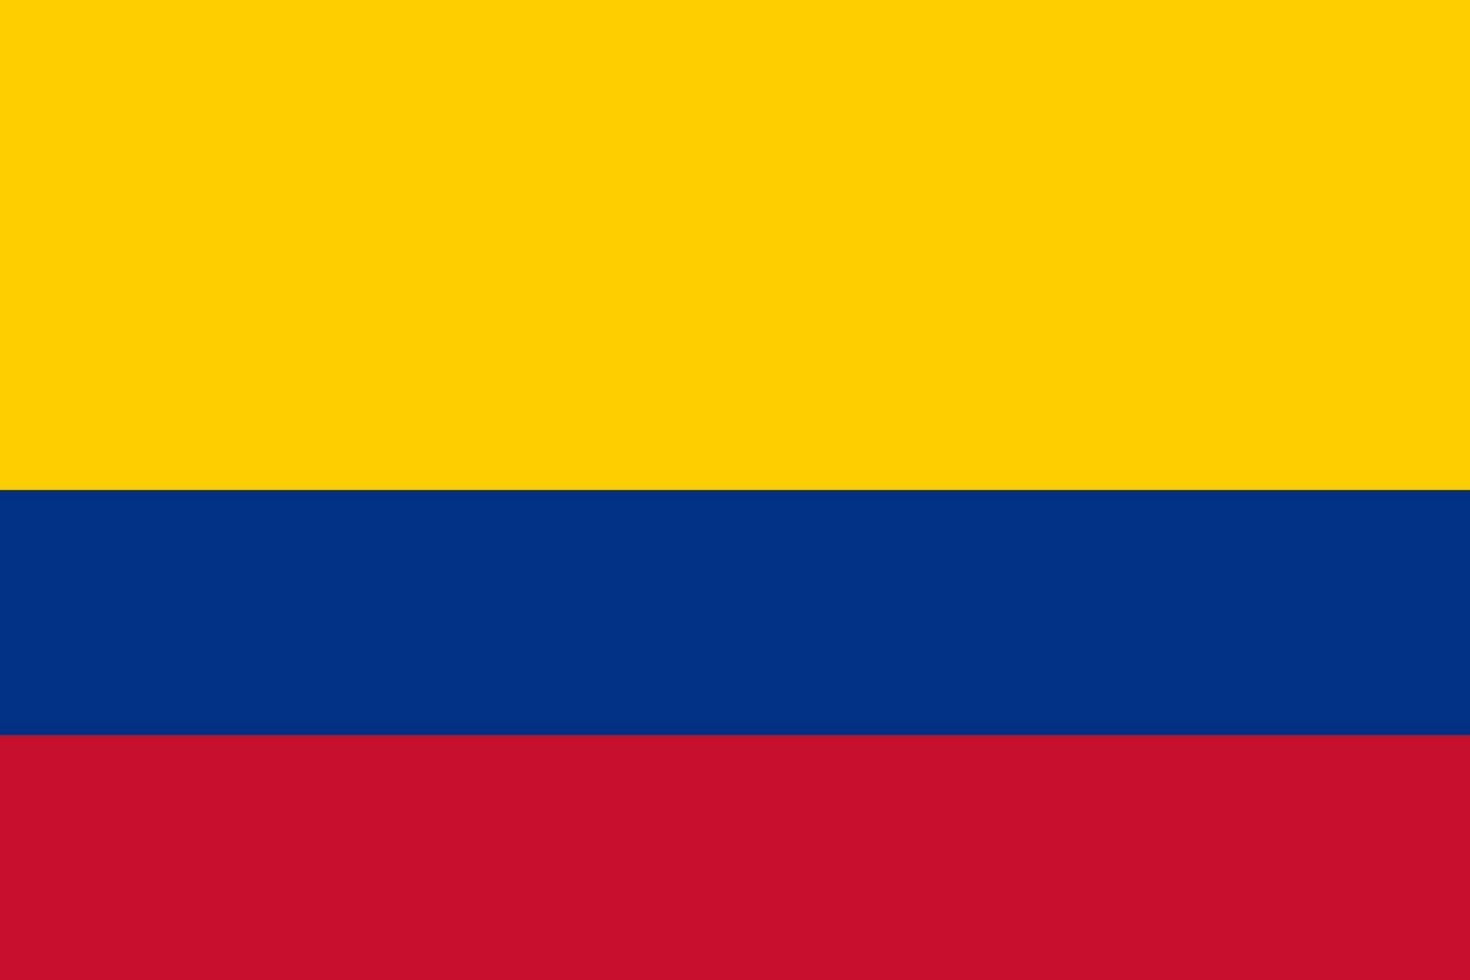 Kolumbien-Flagge, offizielle Farben und Proportionen. Vektor-Illustration. vektor